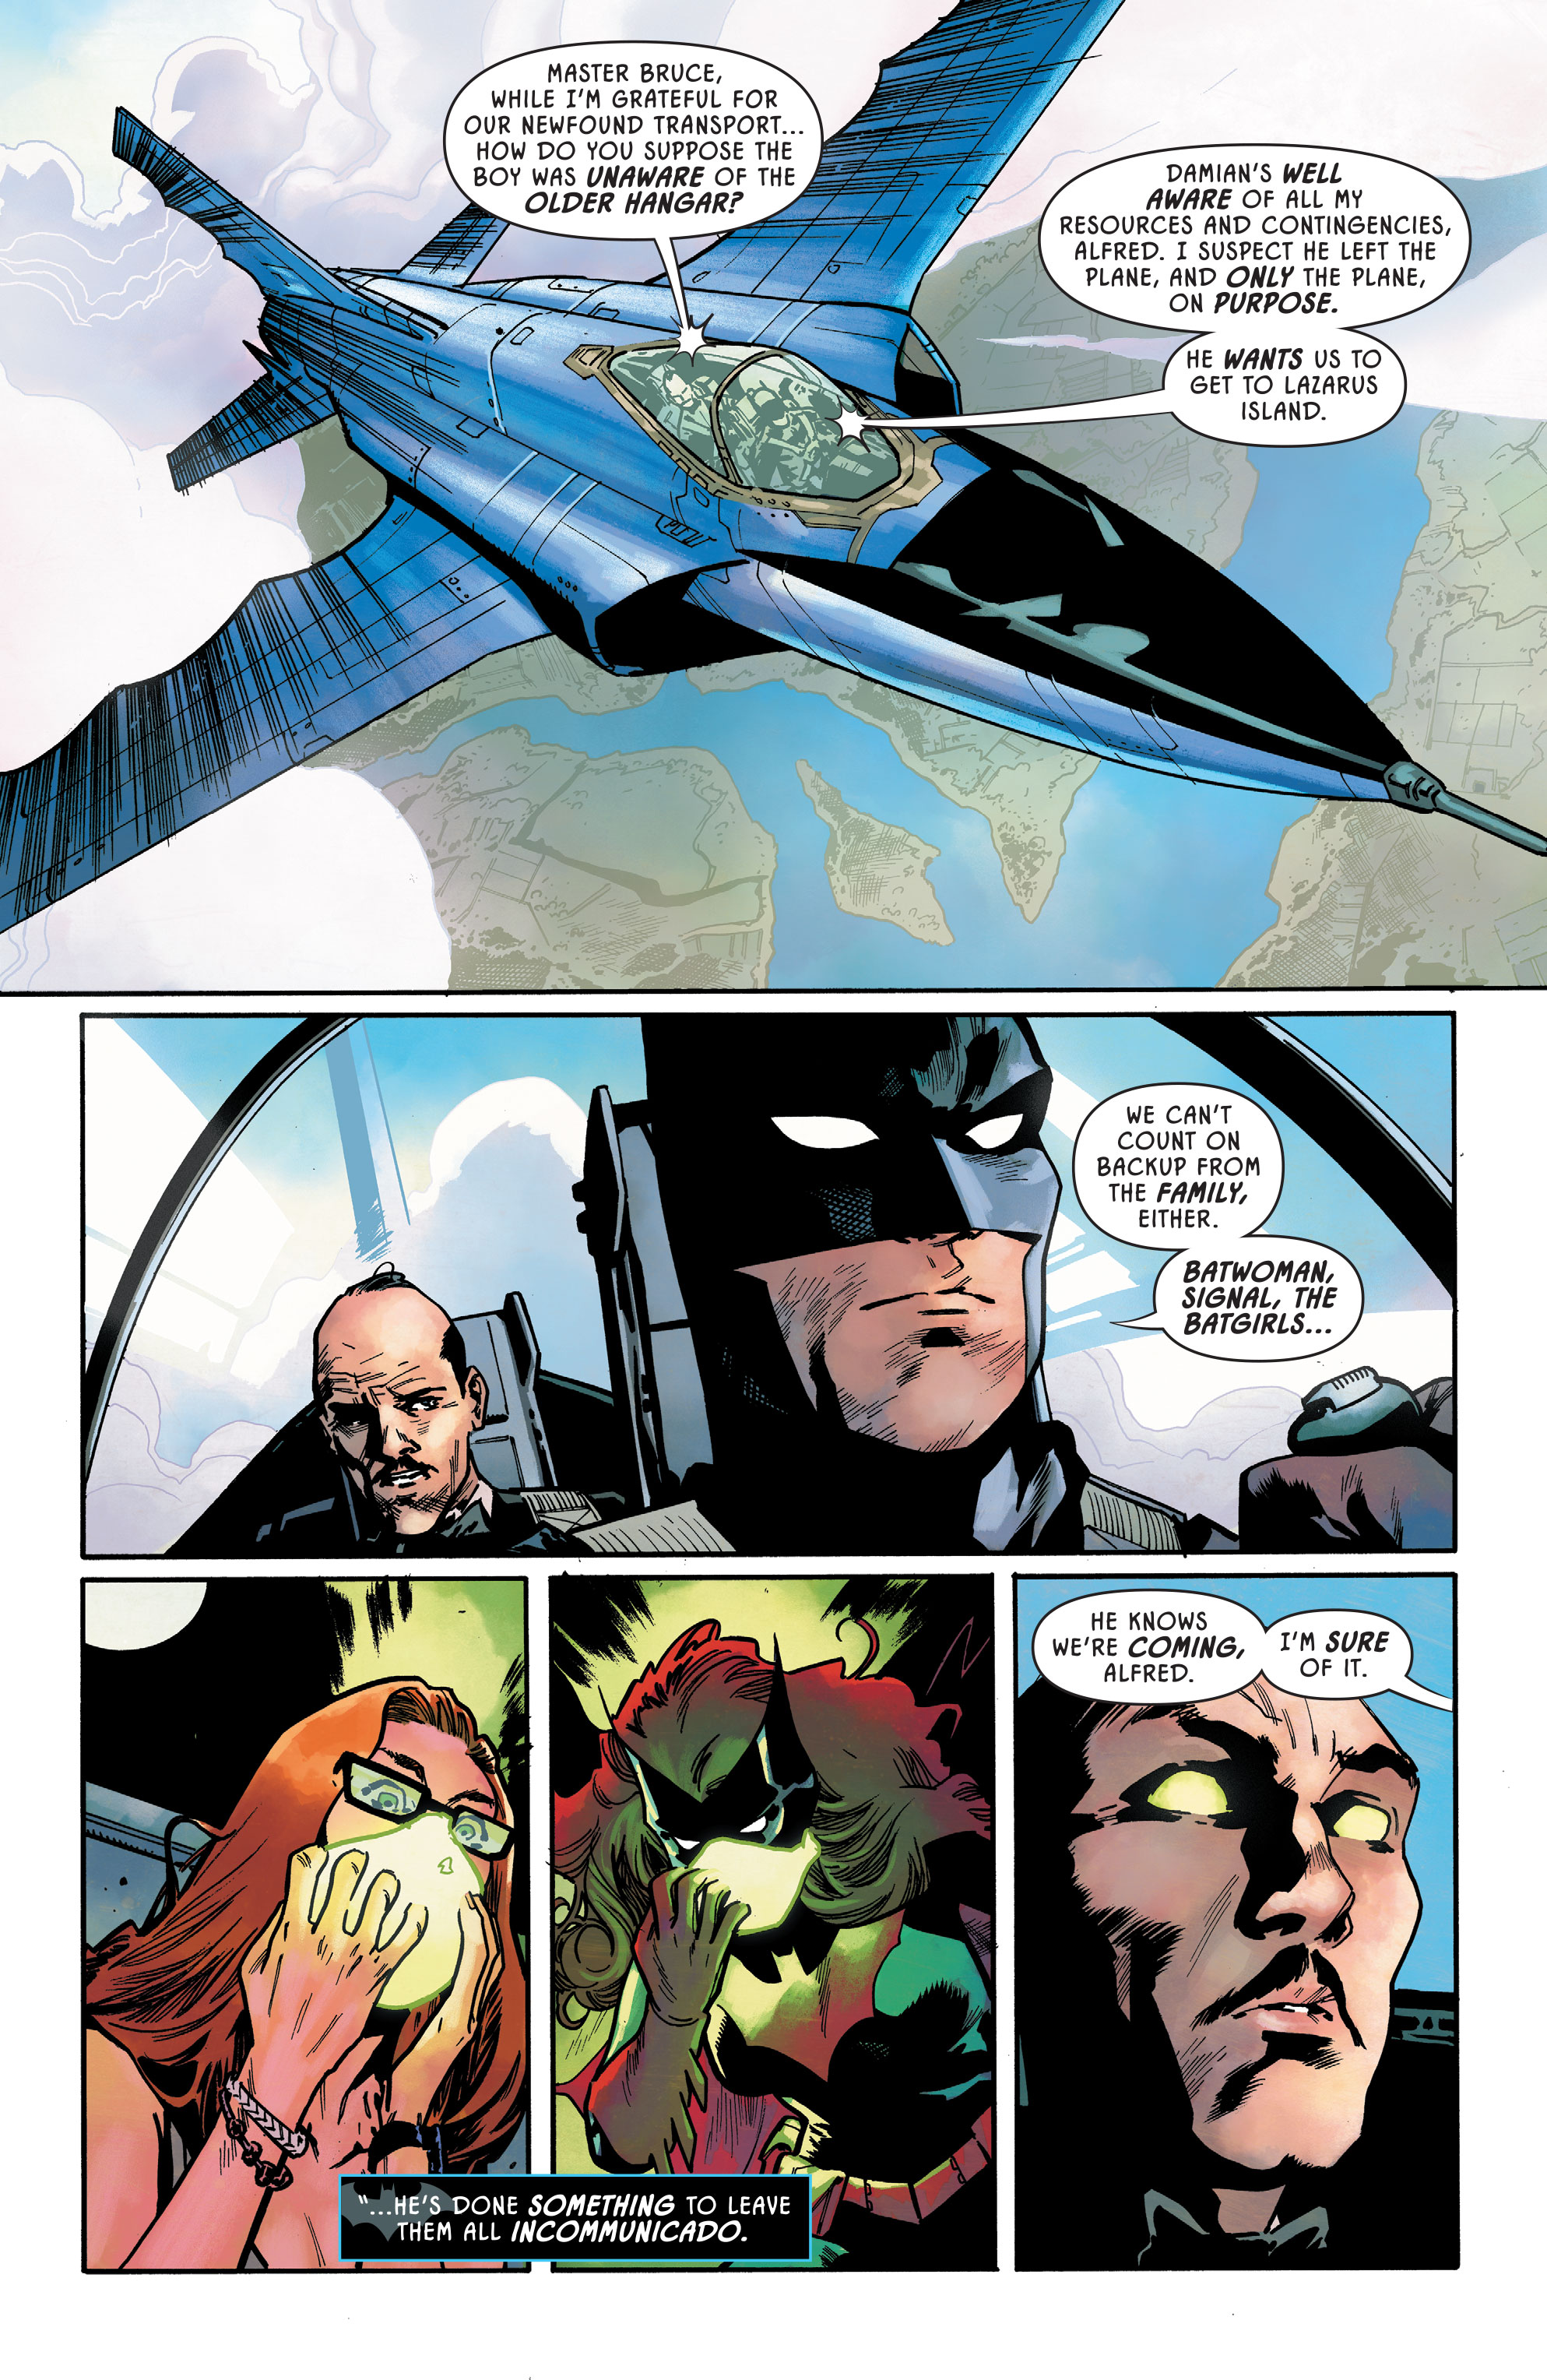 Weird Science DC Comics: Batman vs. Robin #3 Review